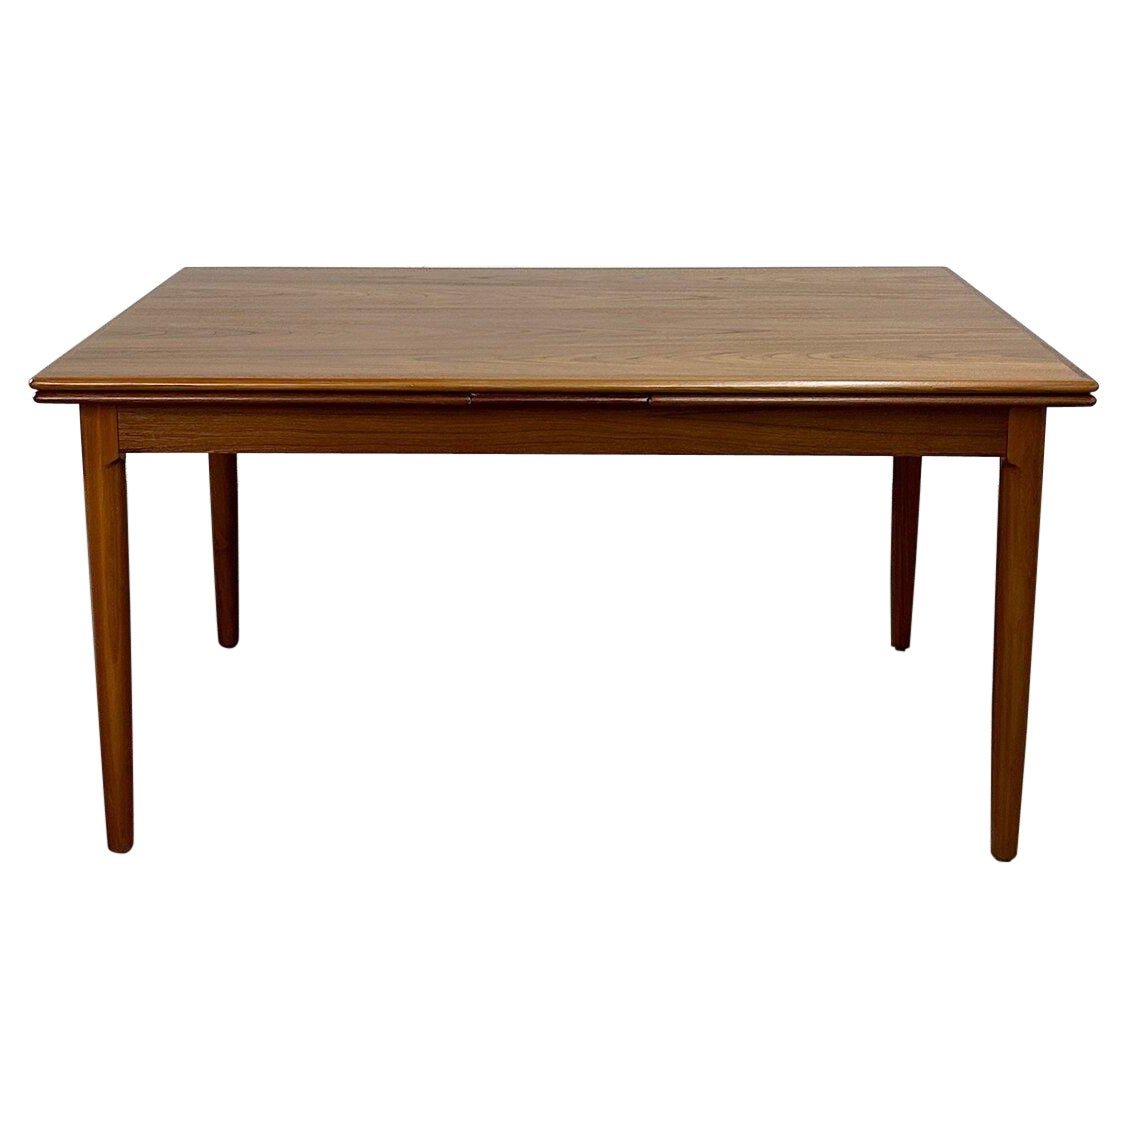 Danish modern minimal dining table For Sale